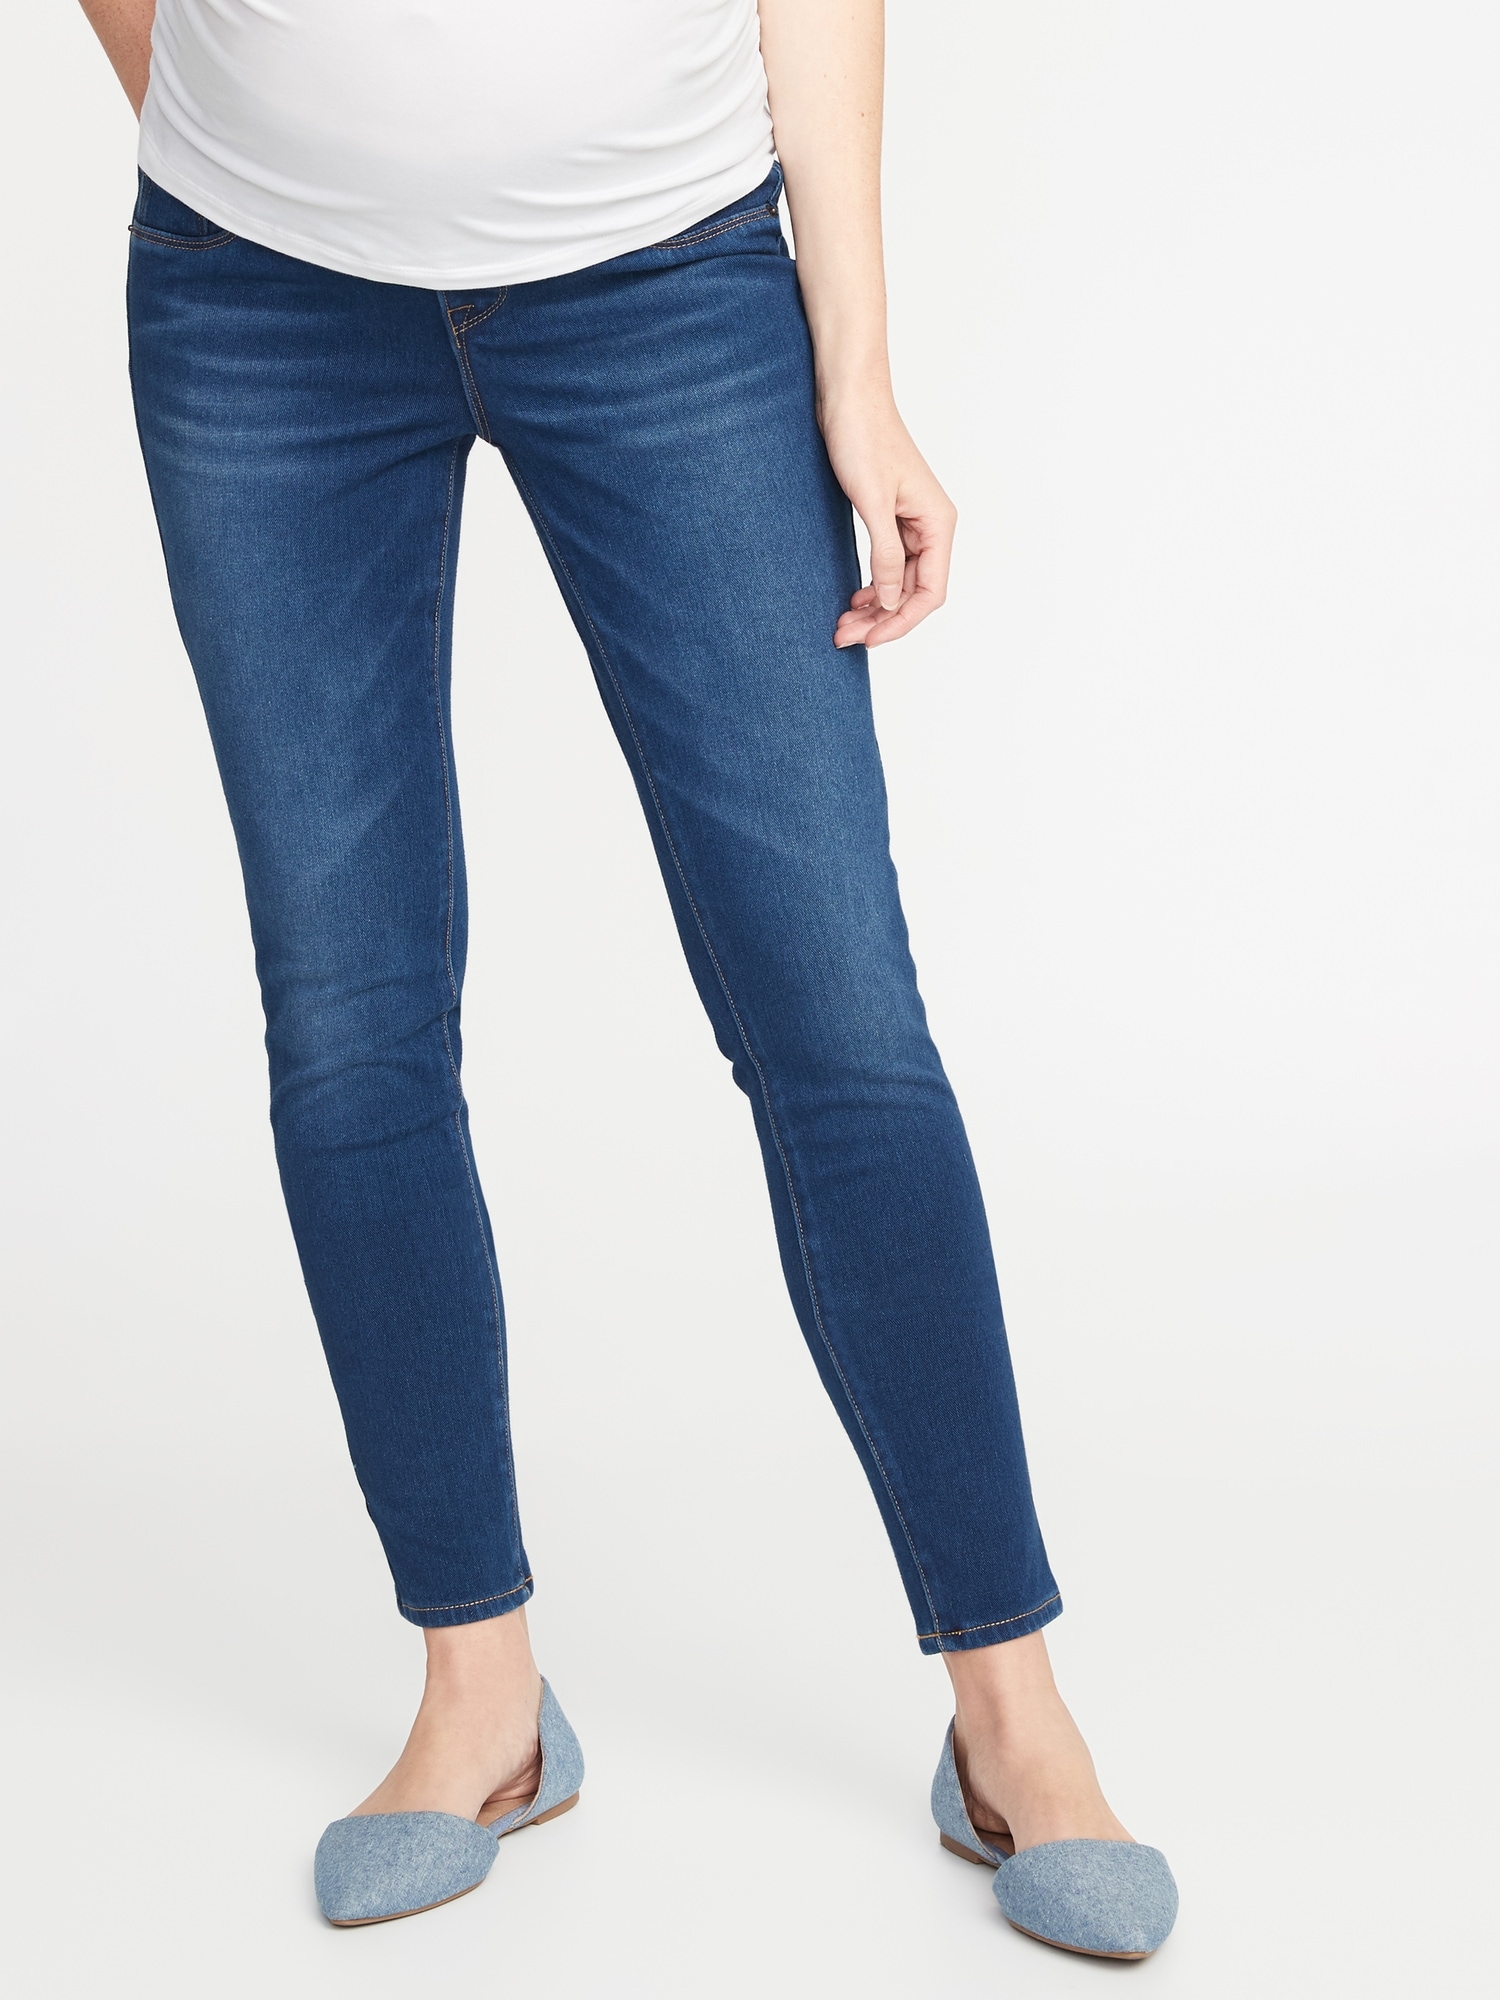 old navy pregnancy jeans